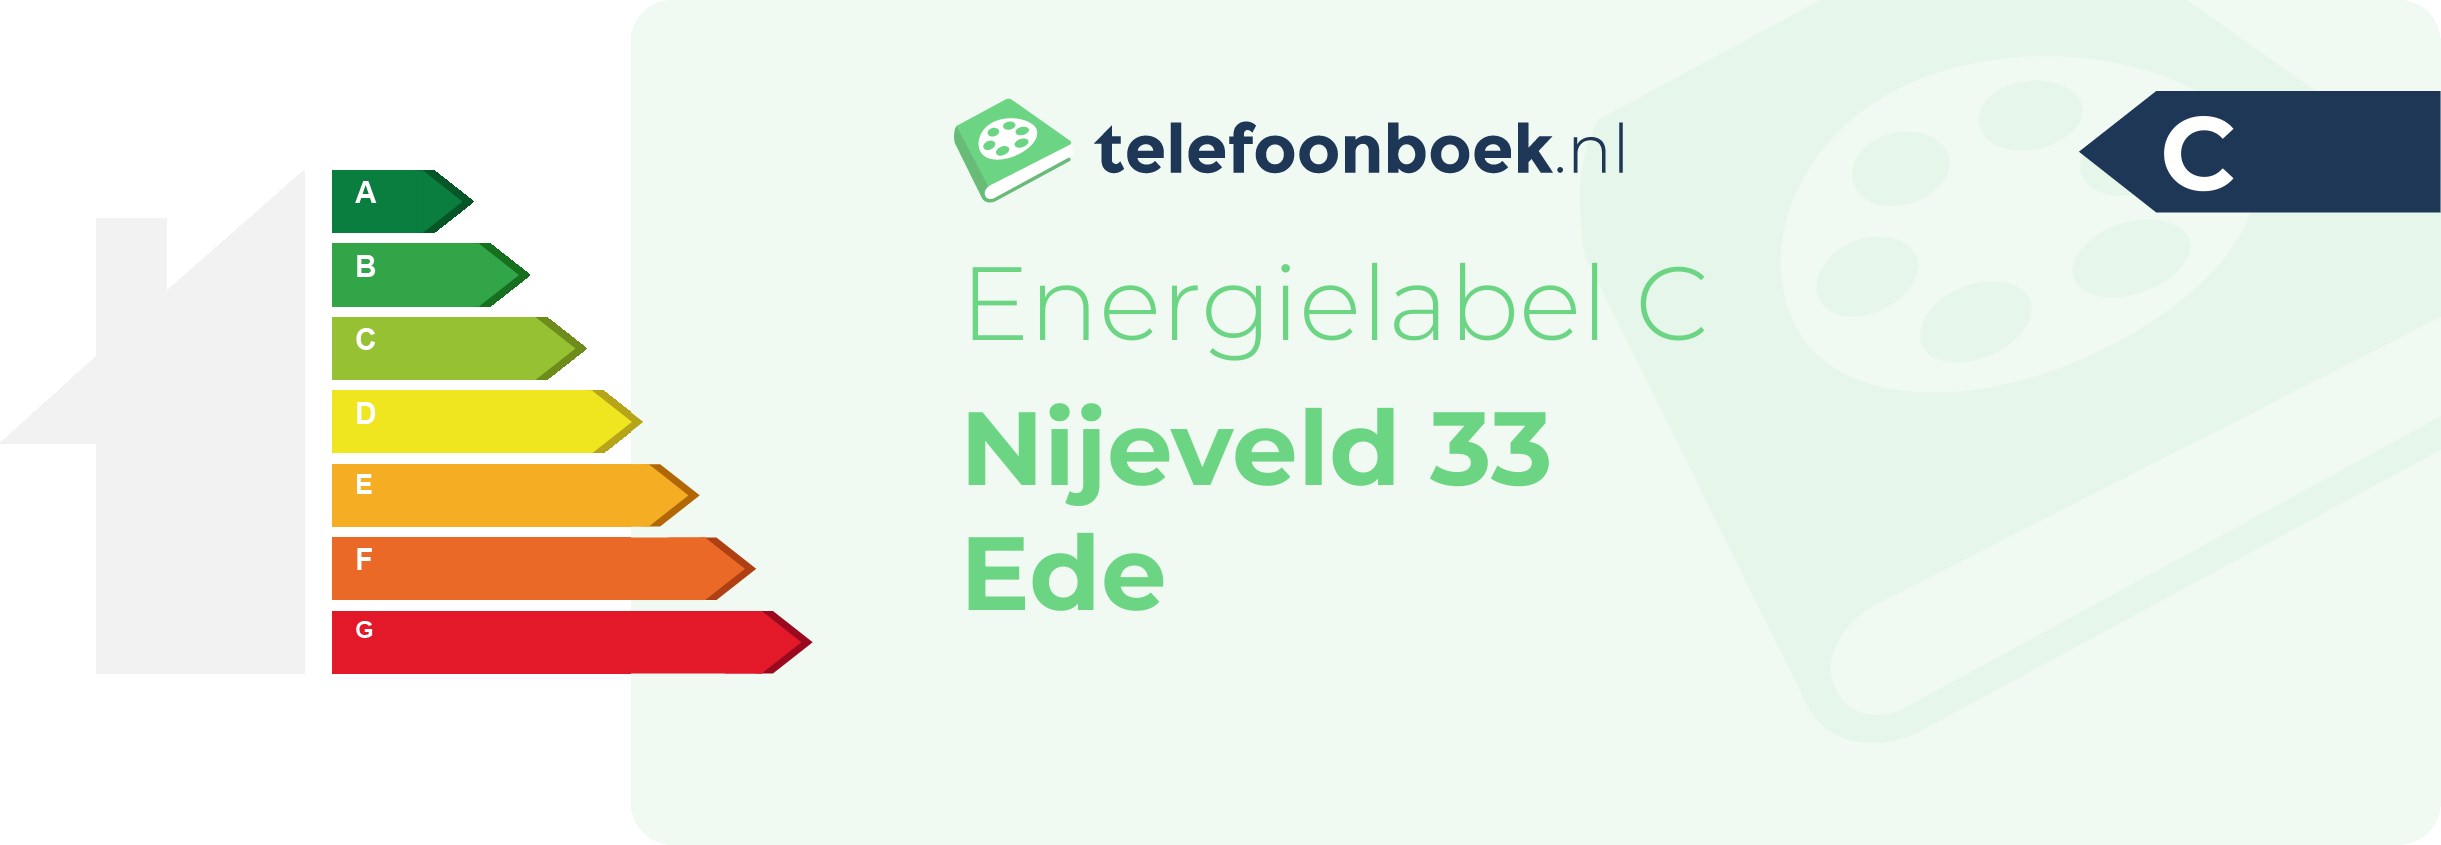 Energielabel Nijeveld 33 Ede